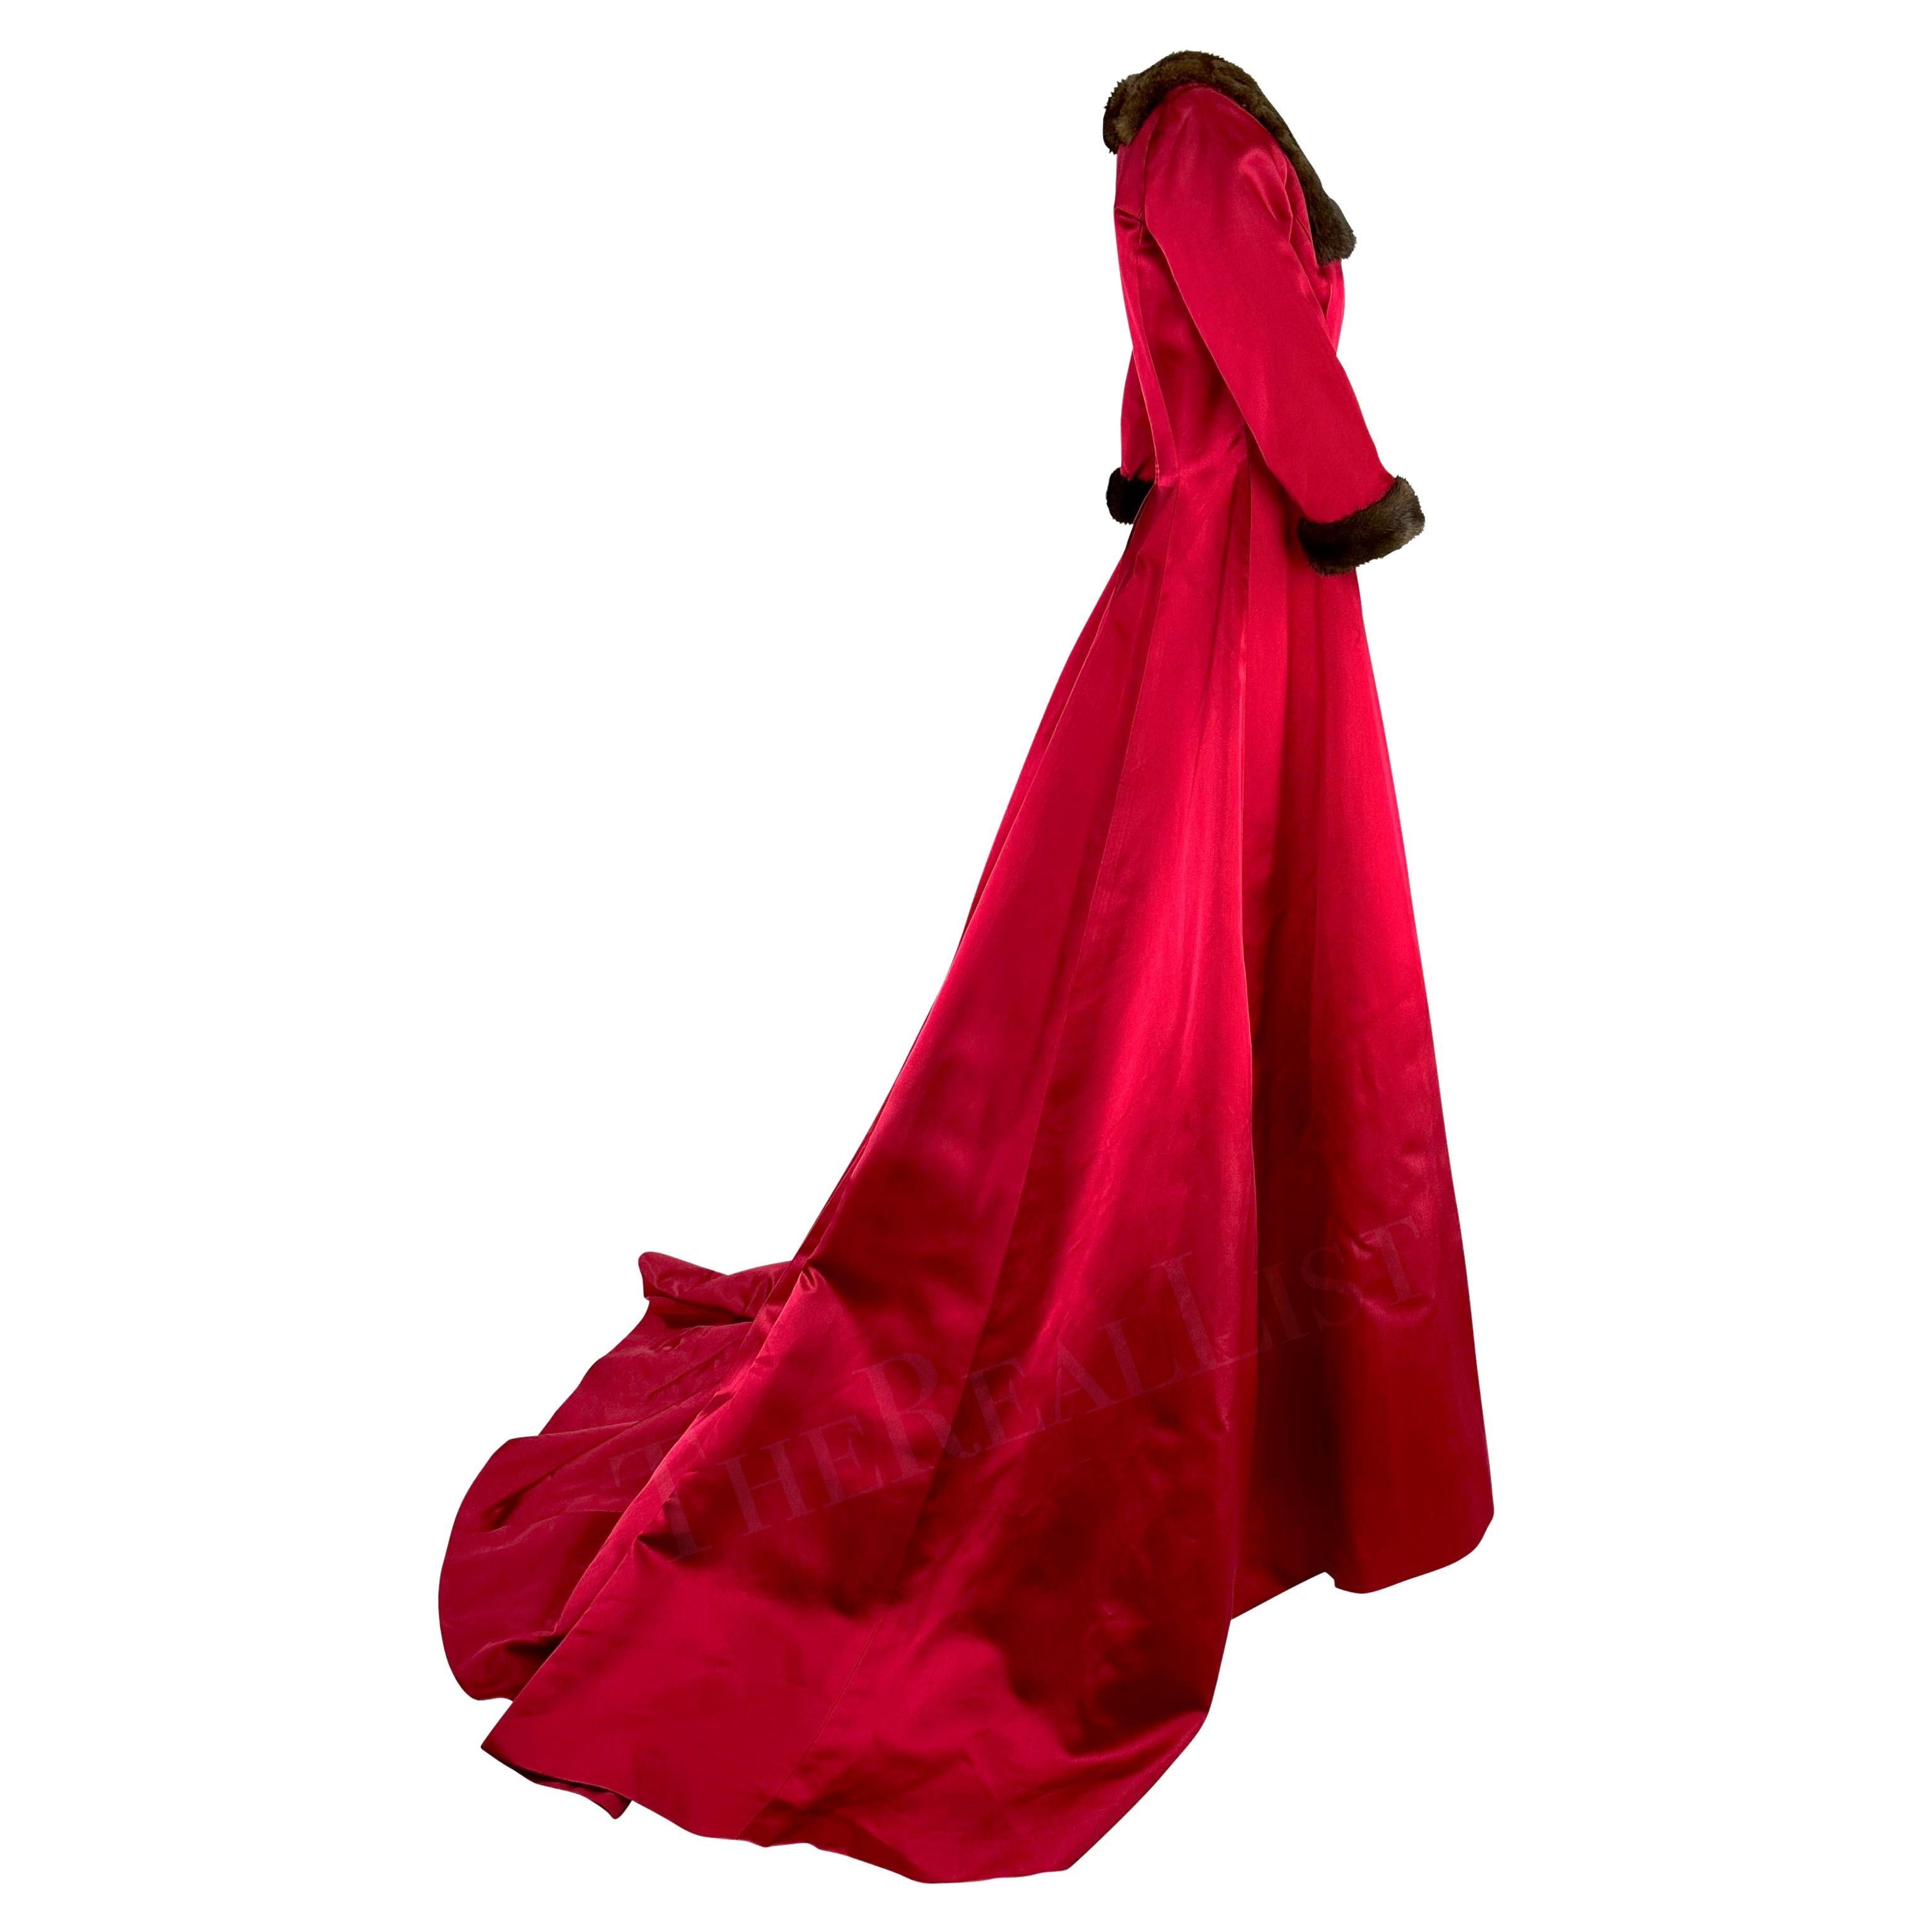 F/W 1999 Oscar de la Renta Naomi Campbell Runway Red Silk Satin Regal Mink Gown For Sale 5